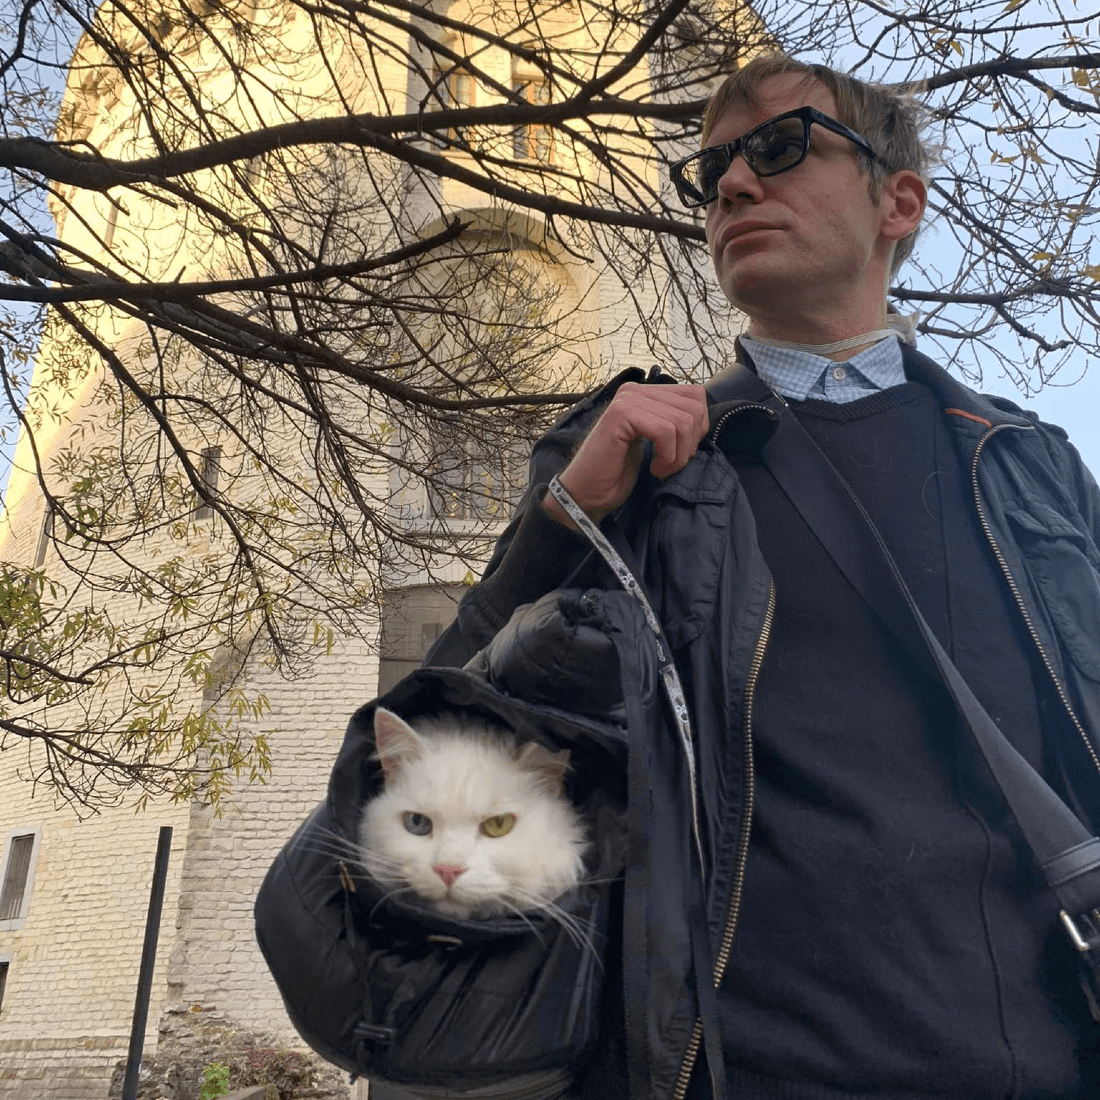 Berislab Buca with his cat Pulci